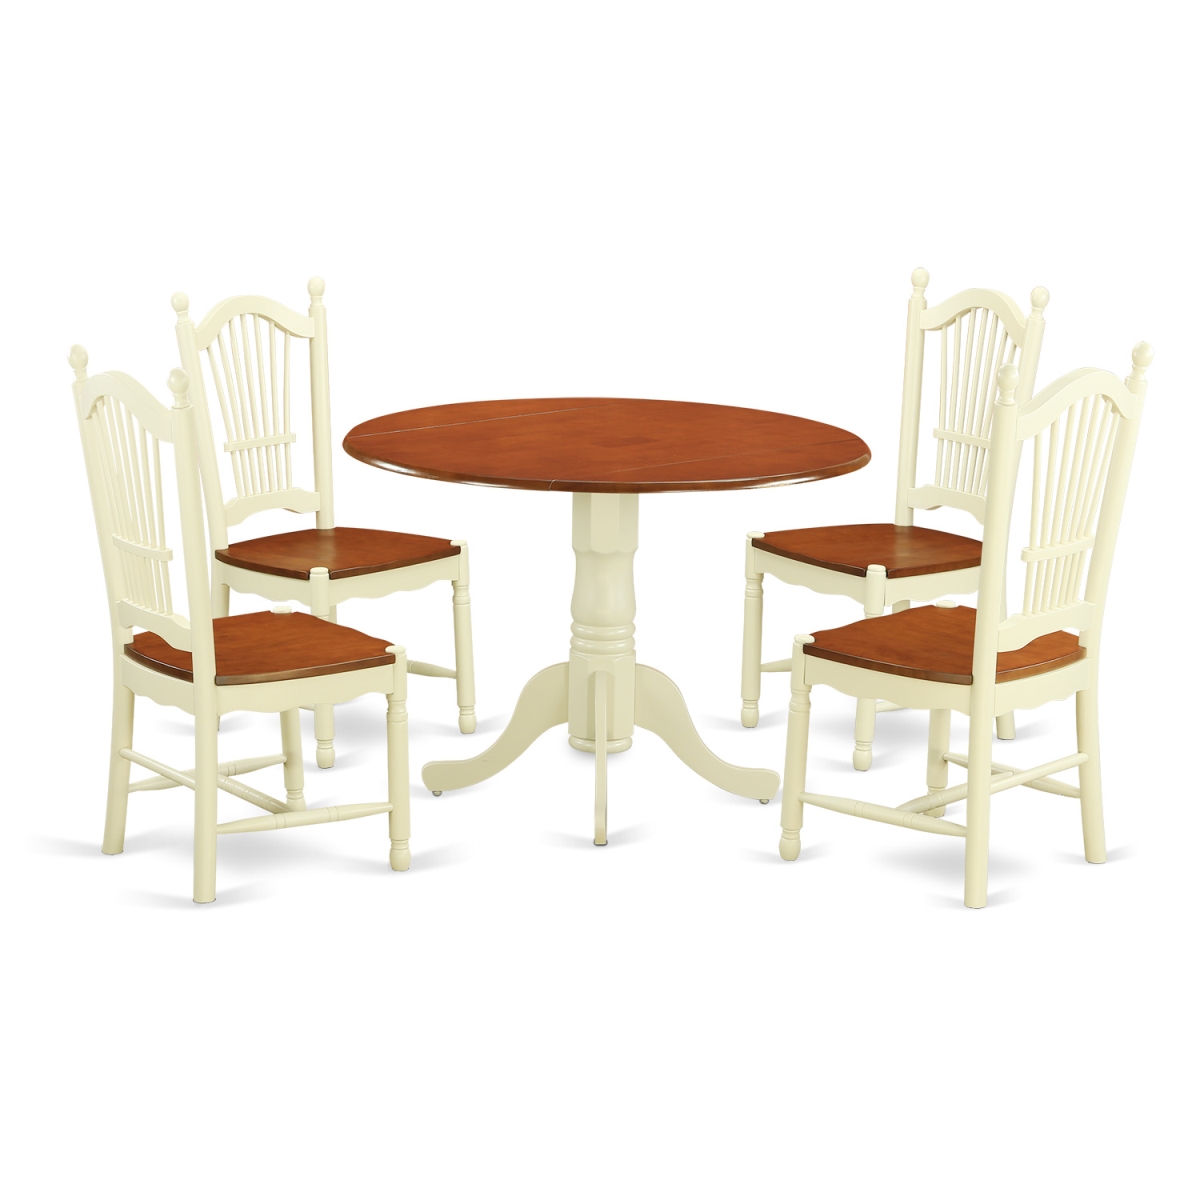 Picture of East West Furniture DLDO5-BMK-W Kitchen Nook Dining Set - Kitchen Table & 4 Chairs, Buttermilk & Cherry - 5 Piece